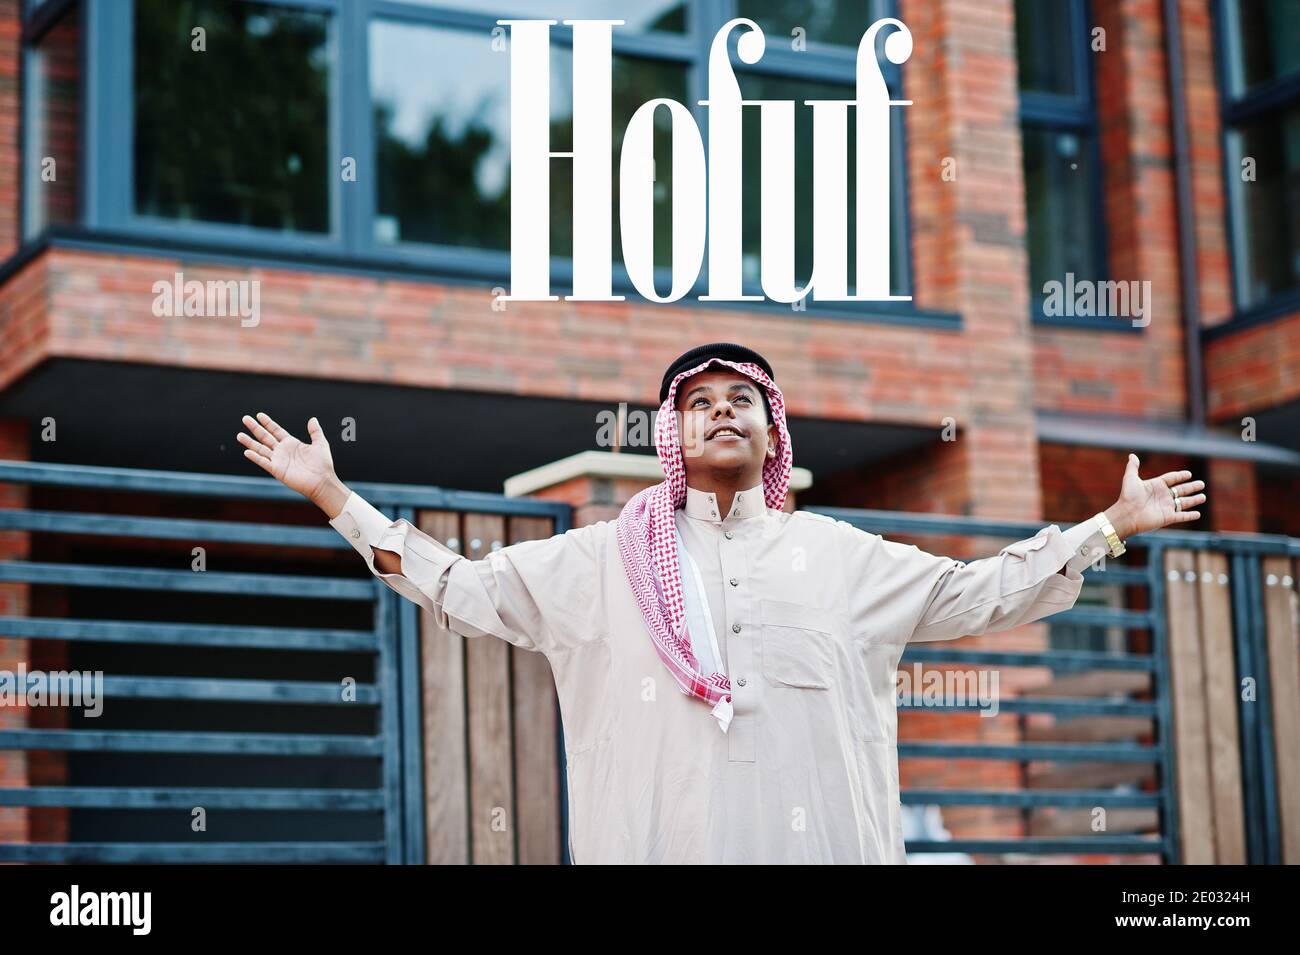 Hofuf - biggest city of Saudi Arabia. Middle Eastern saudi arabian man posed on street against modern building up his hands in the air. Stock Photo